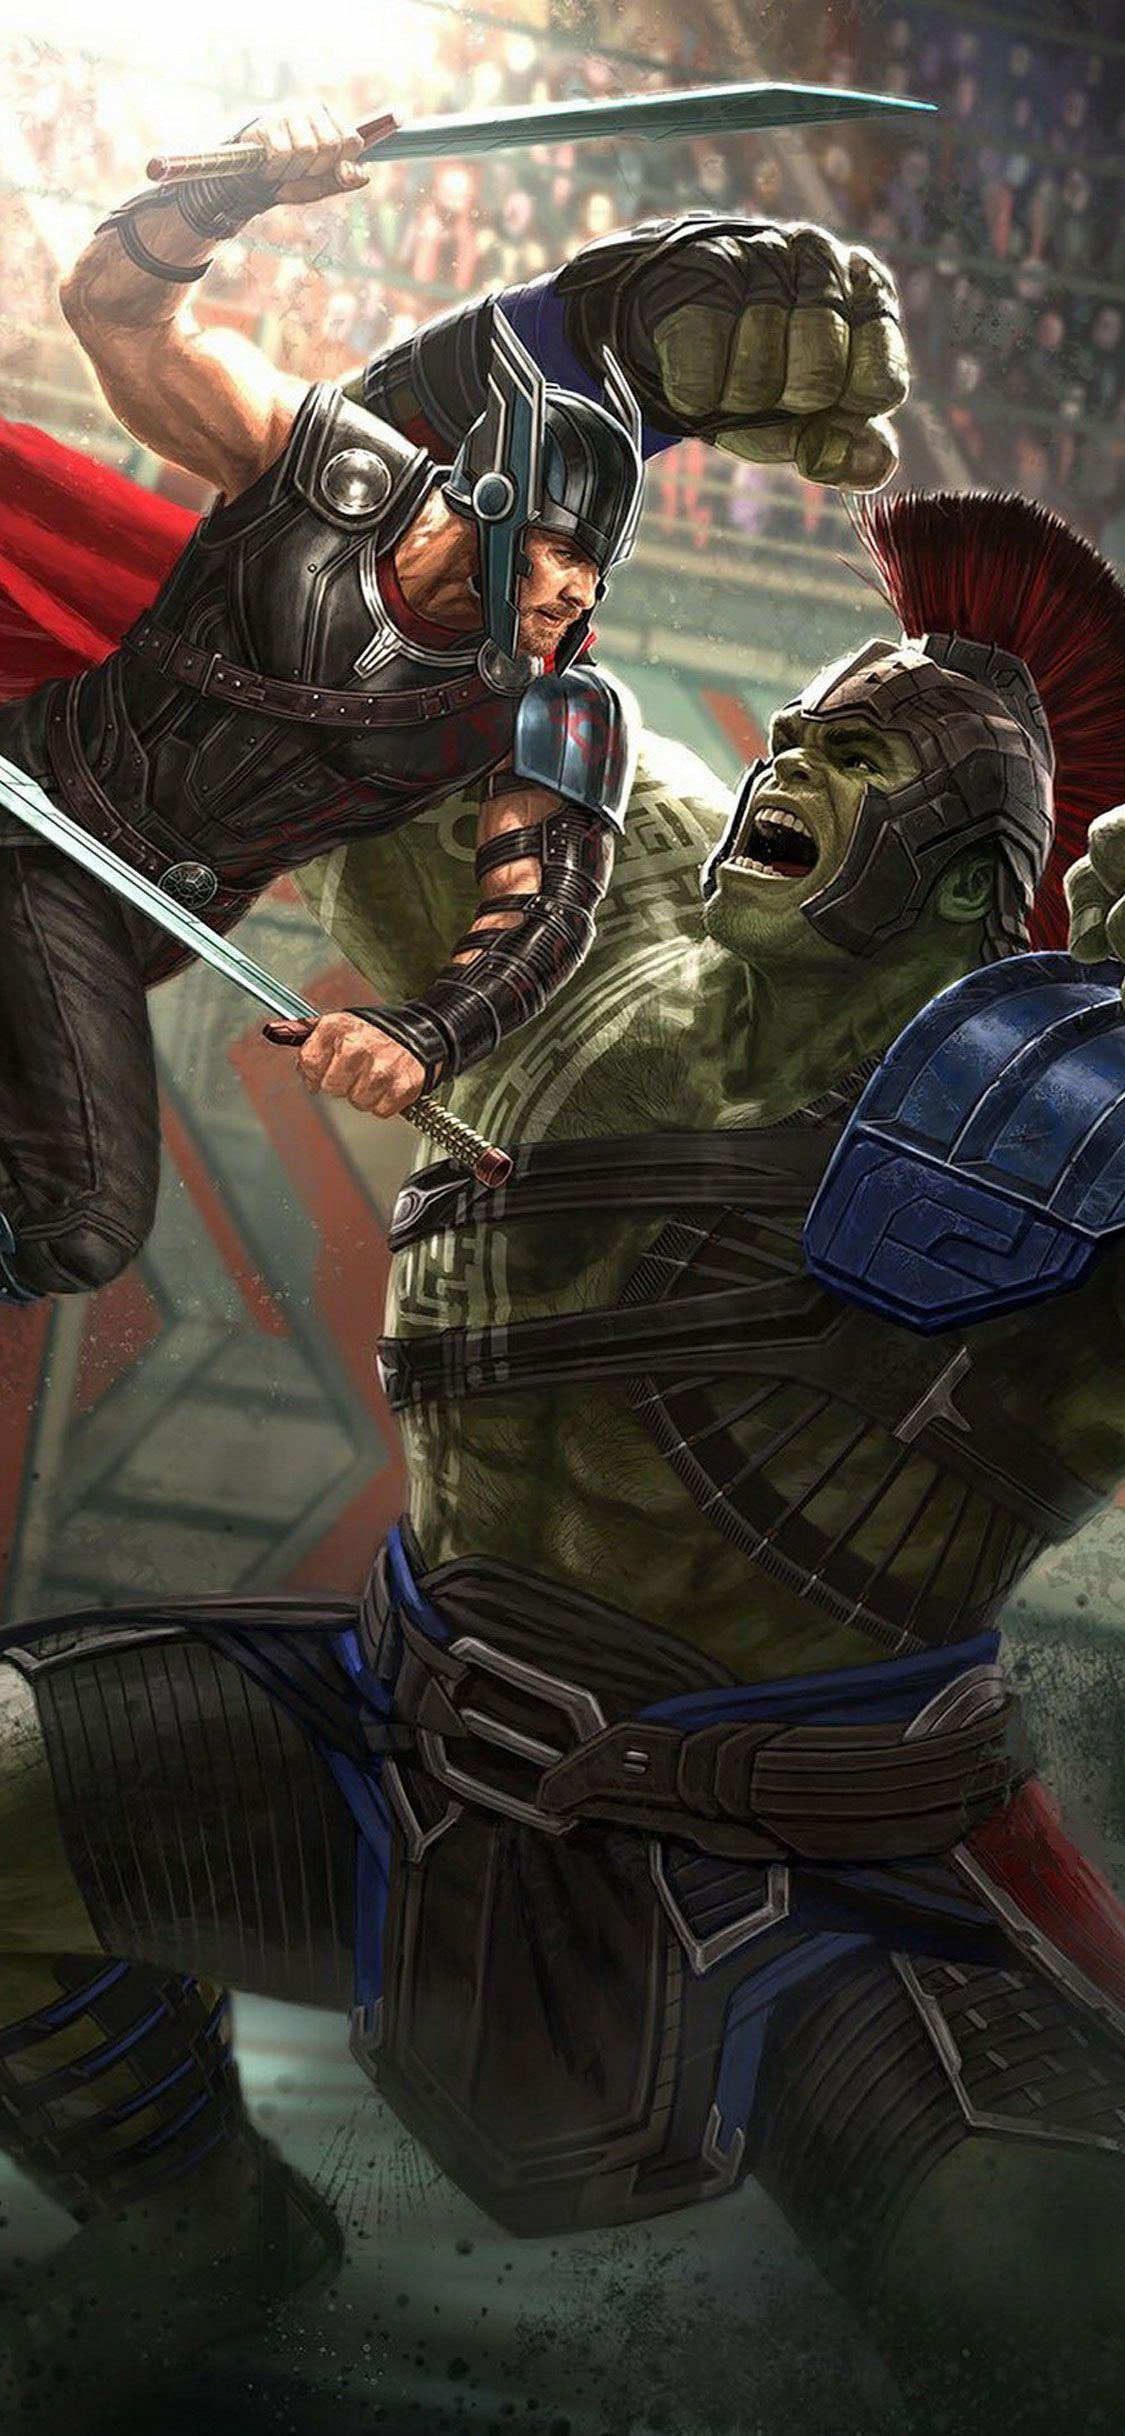 Thor Hulk Fight iPhone X. Anurag. Marvel, Marvel comics, Marvel fan